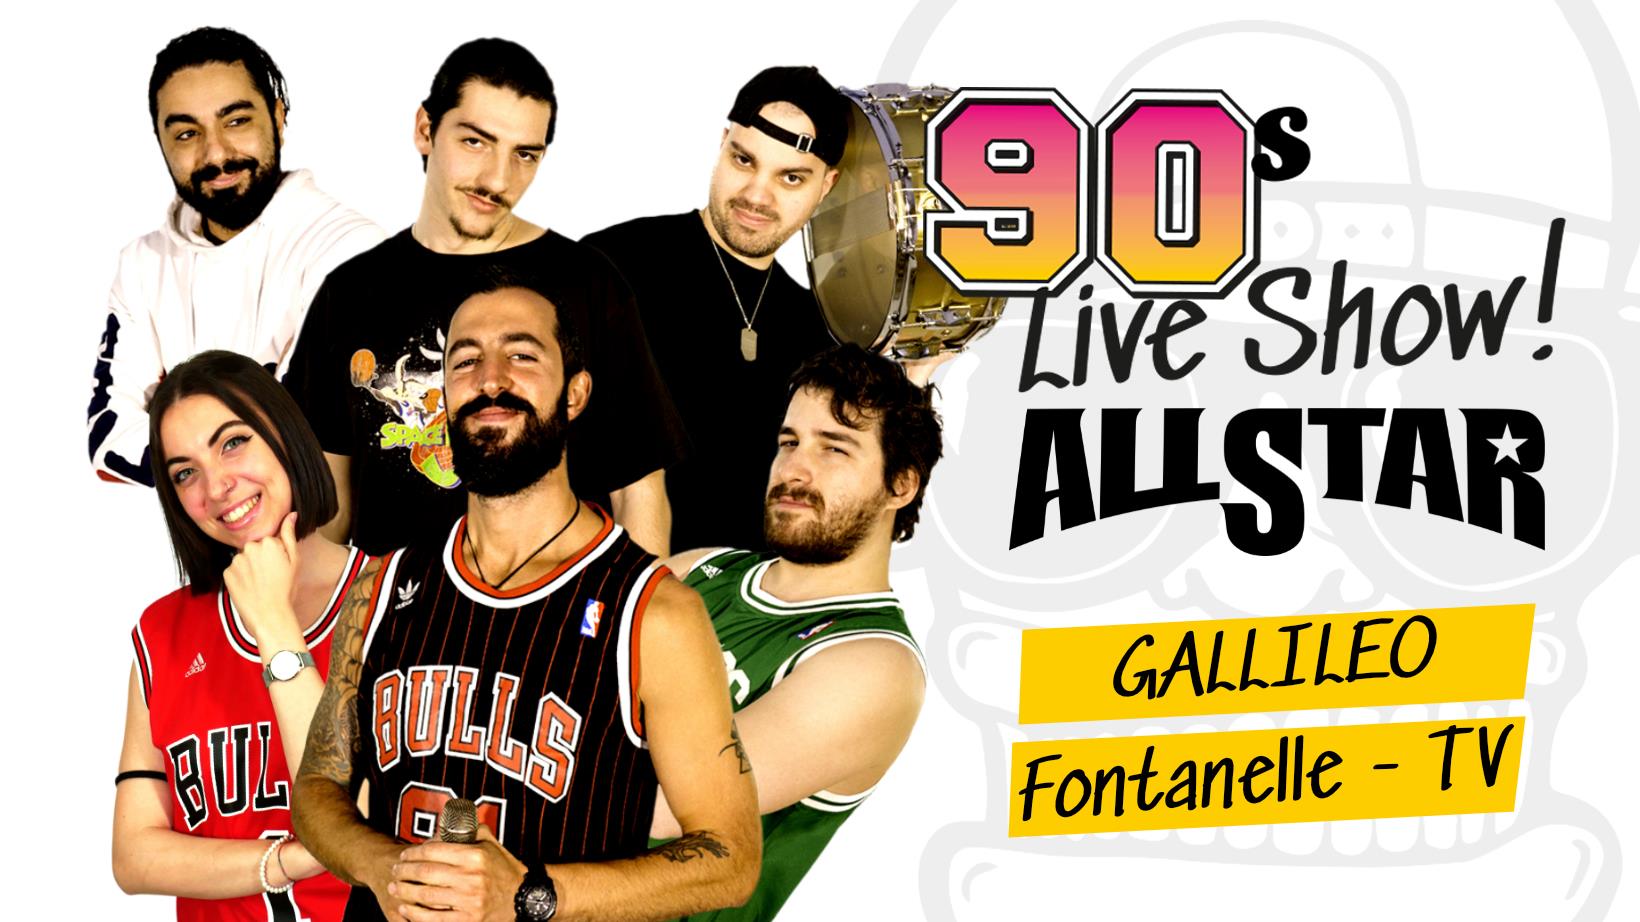 All Star Live al Gallileo Fontanelle